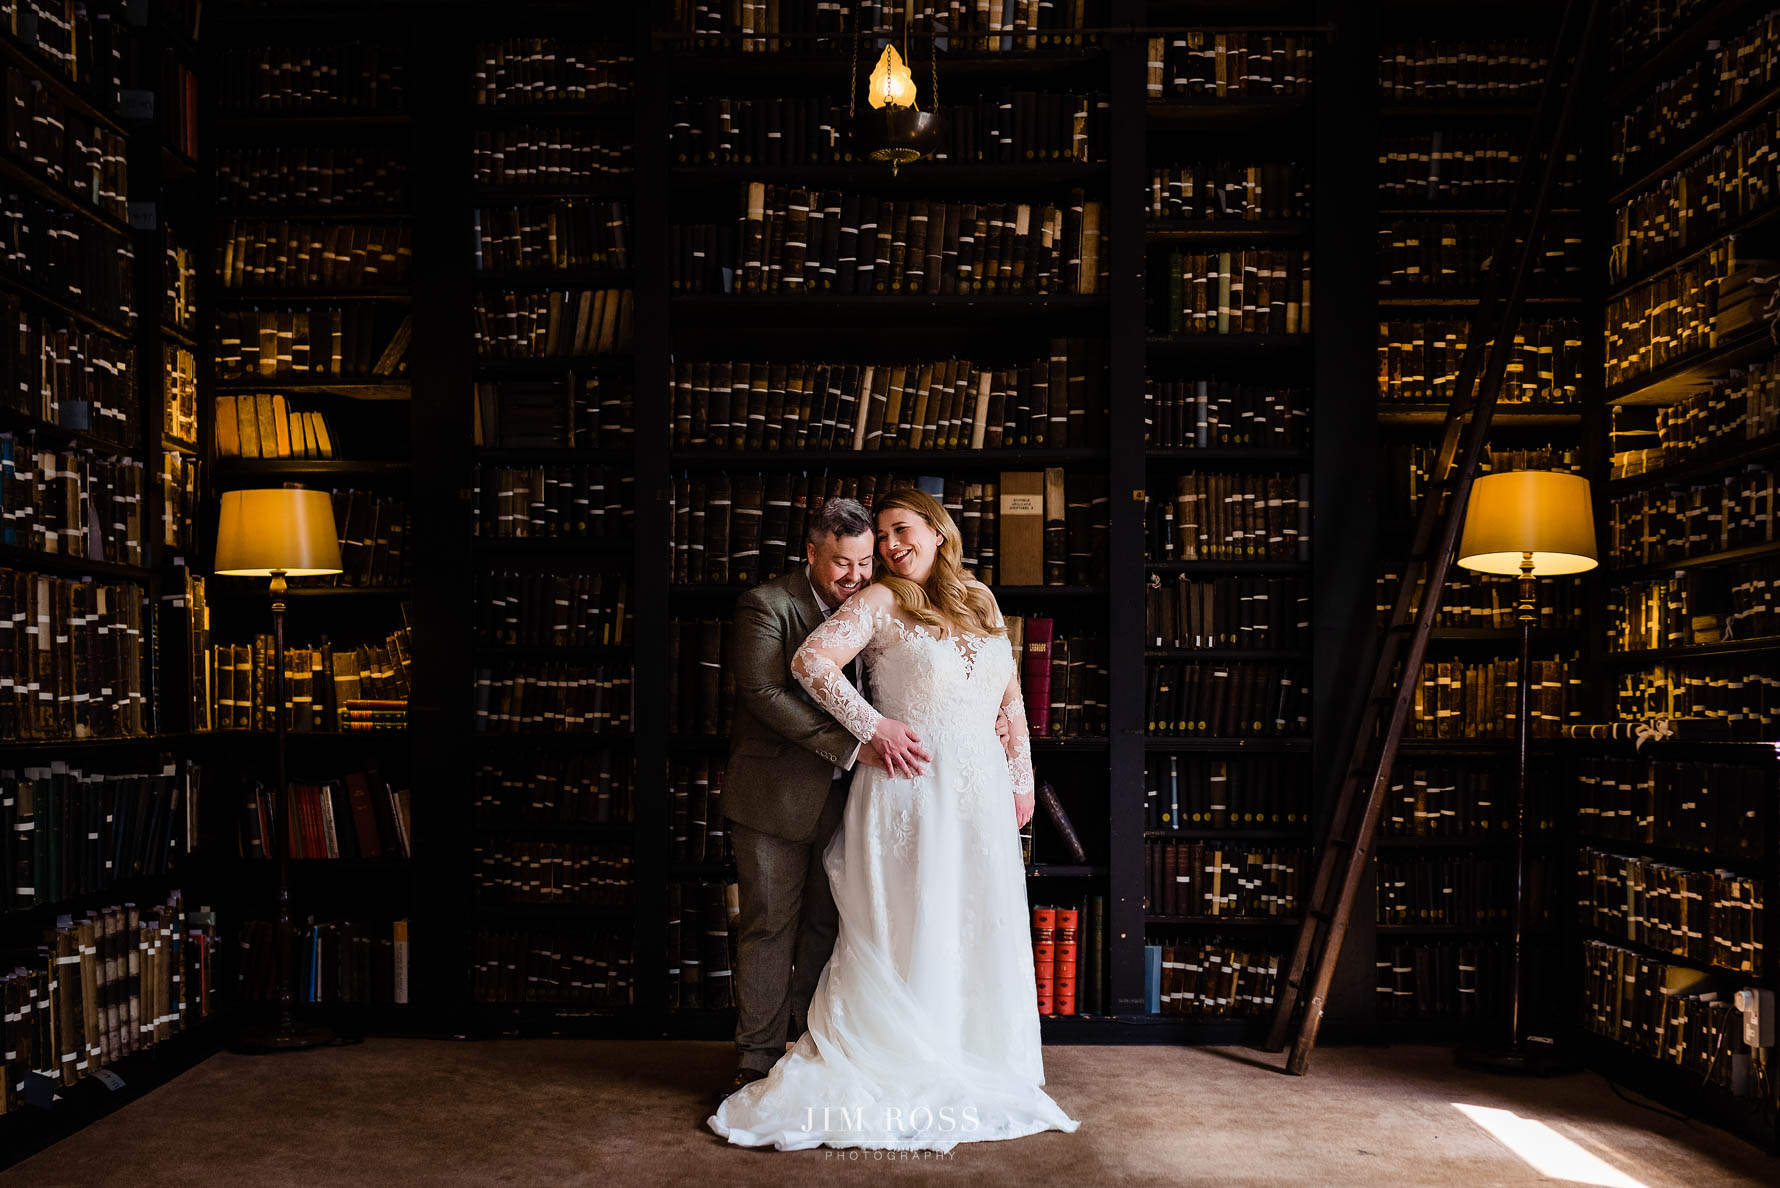 Portico Library Wedding Photographer